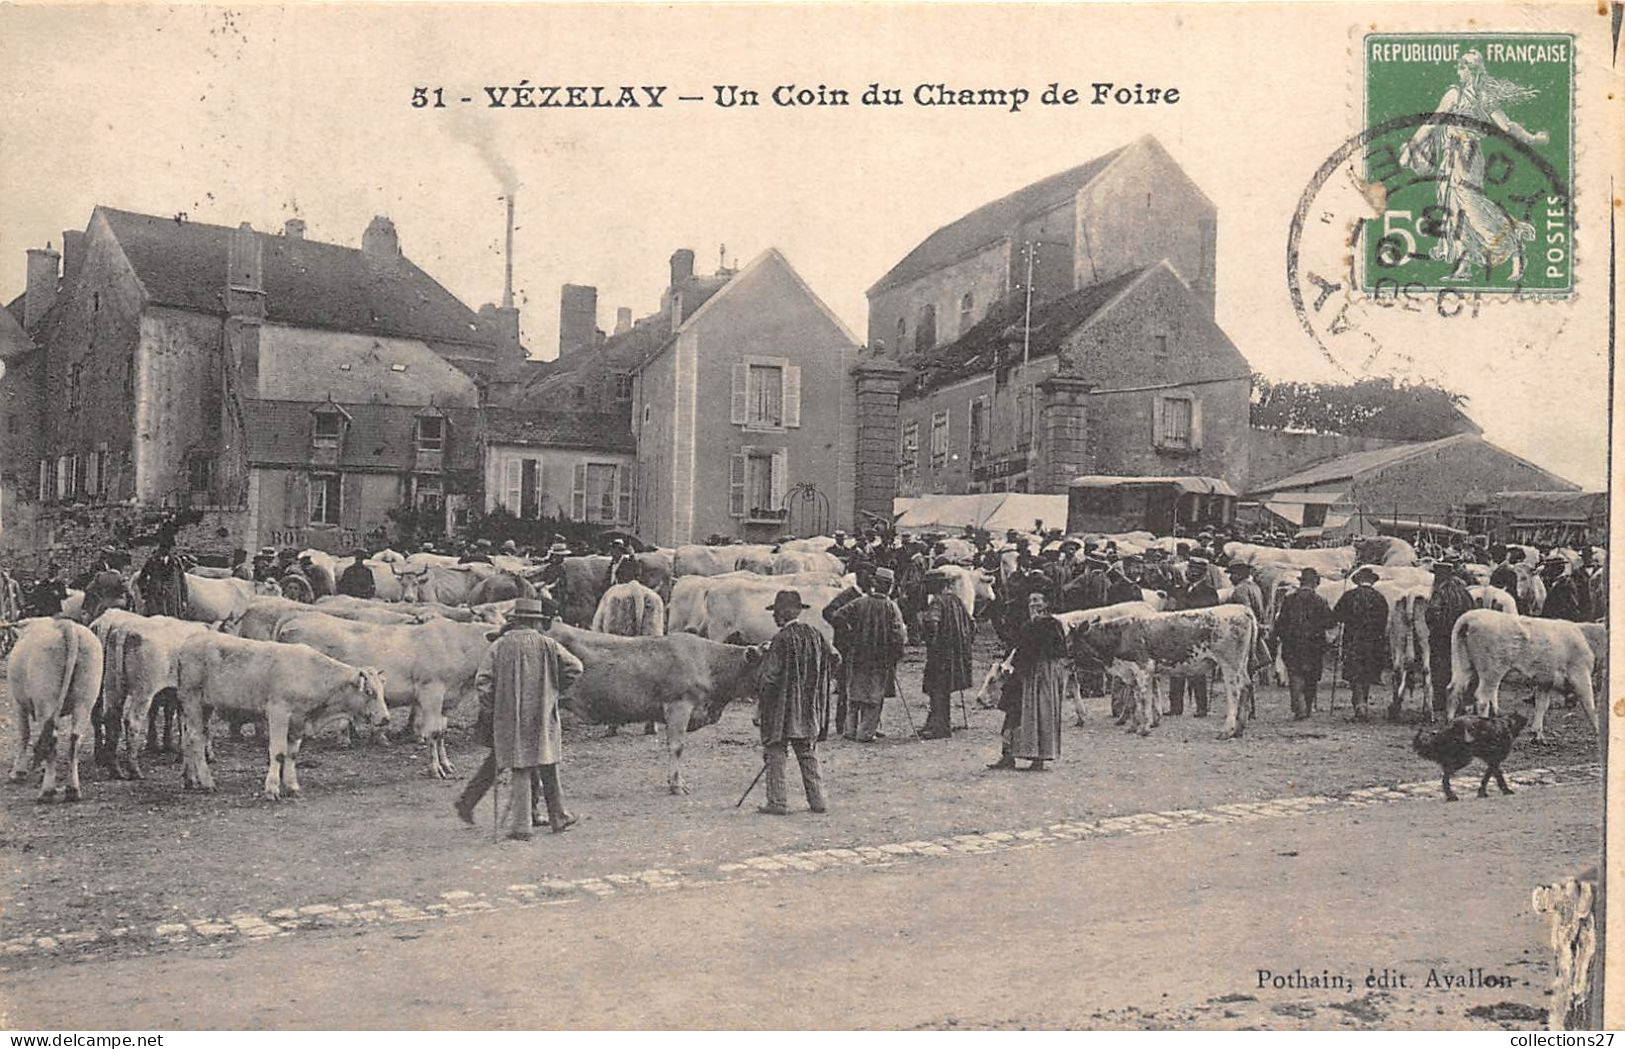 89-VEZELAY- UN COIN DU CHAMP DE FOIRE - Vezelay